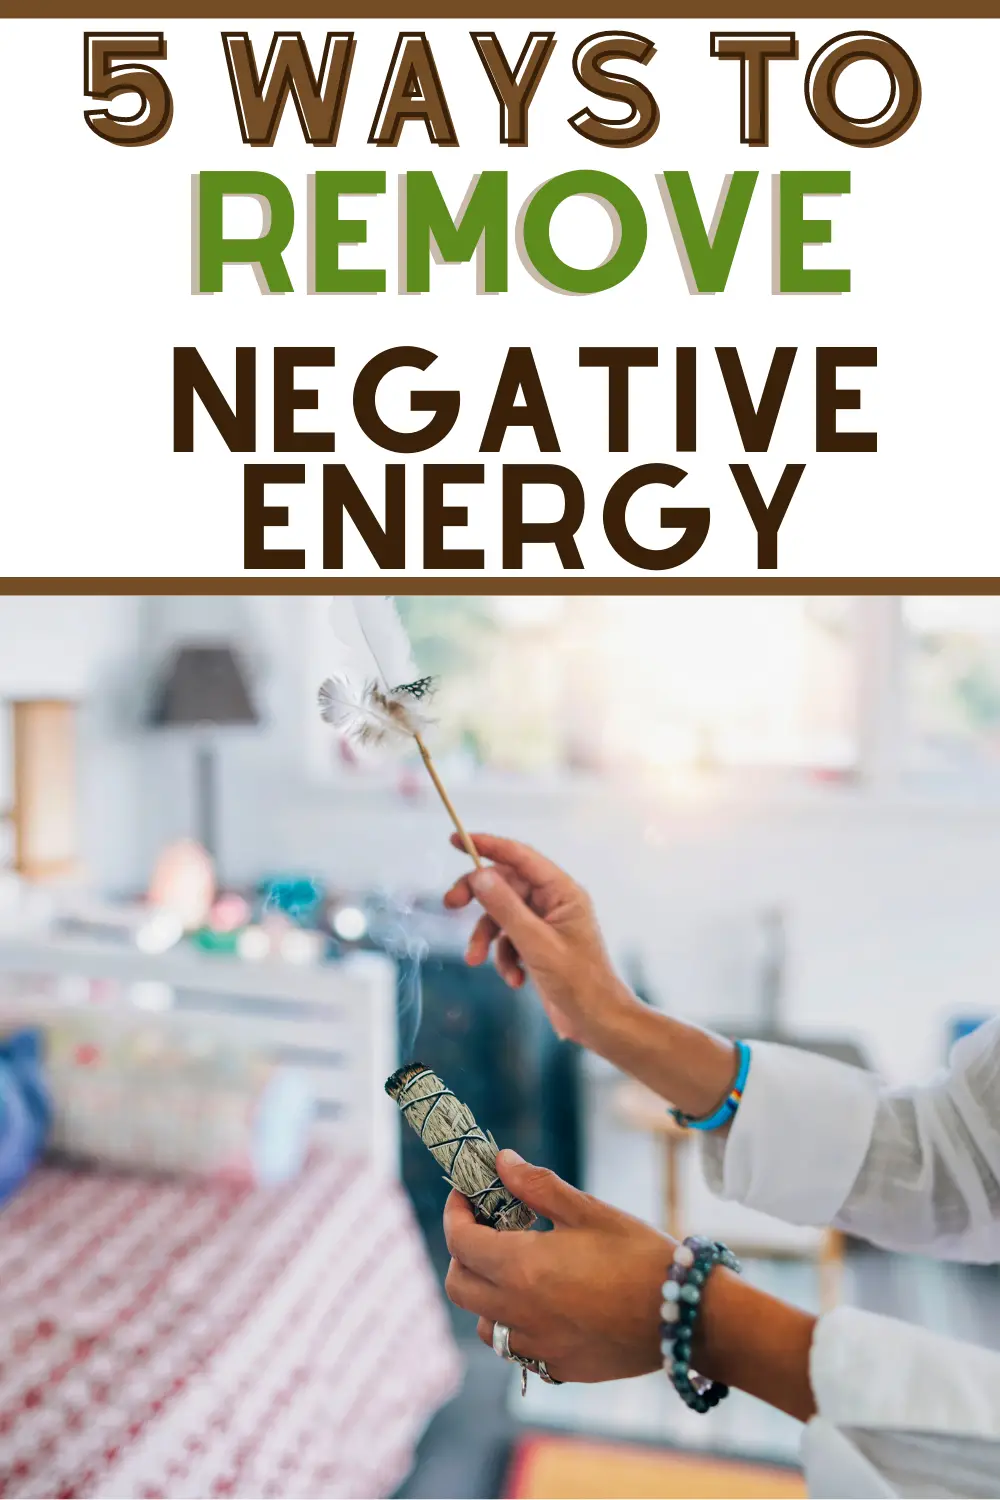 ways to remove negative energy